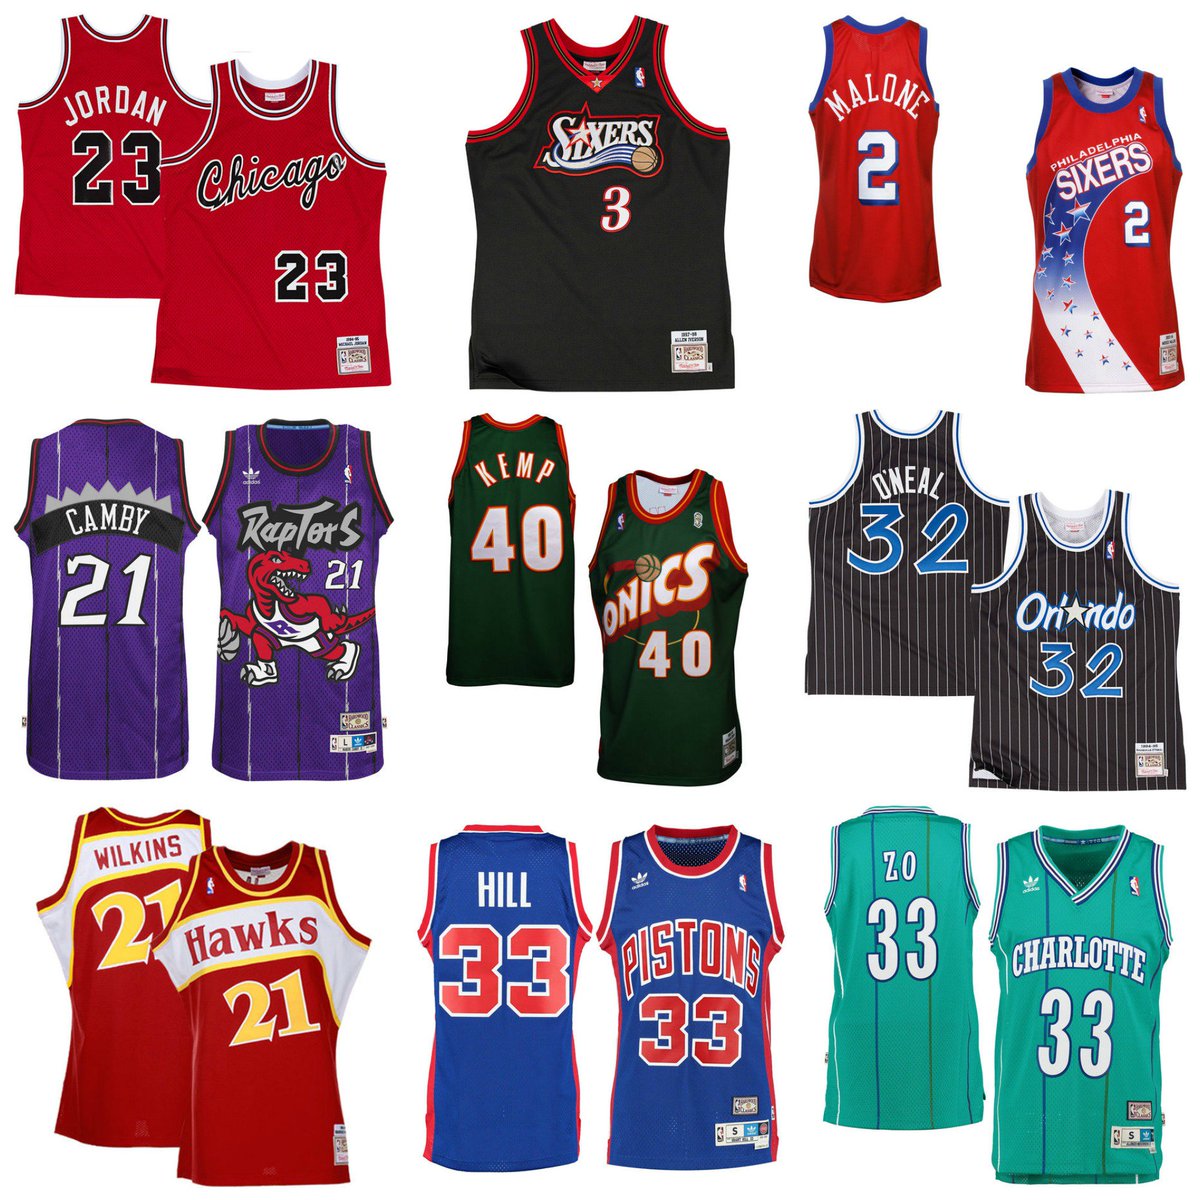 The Top Ten Vintage NBA Jerseys